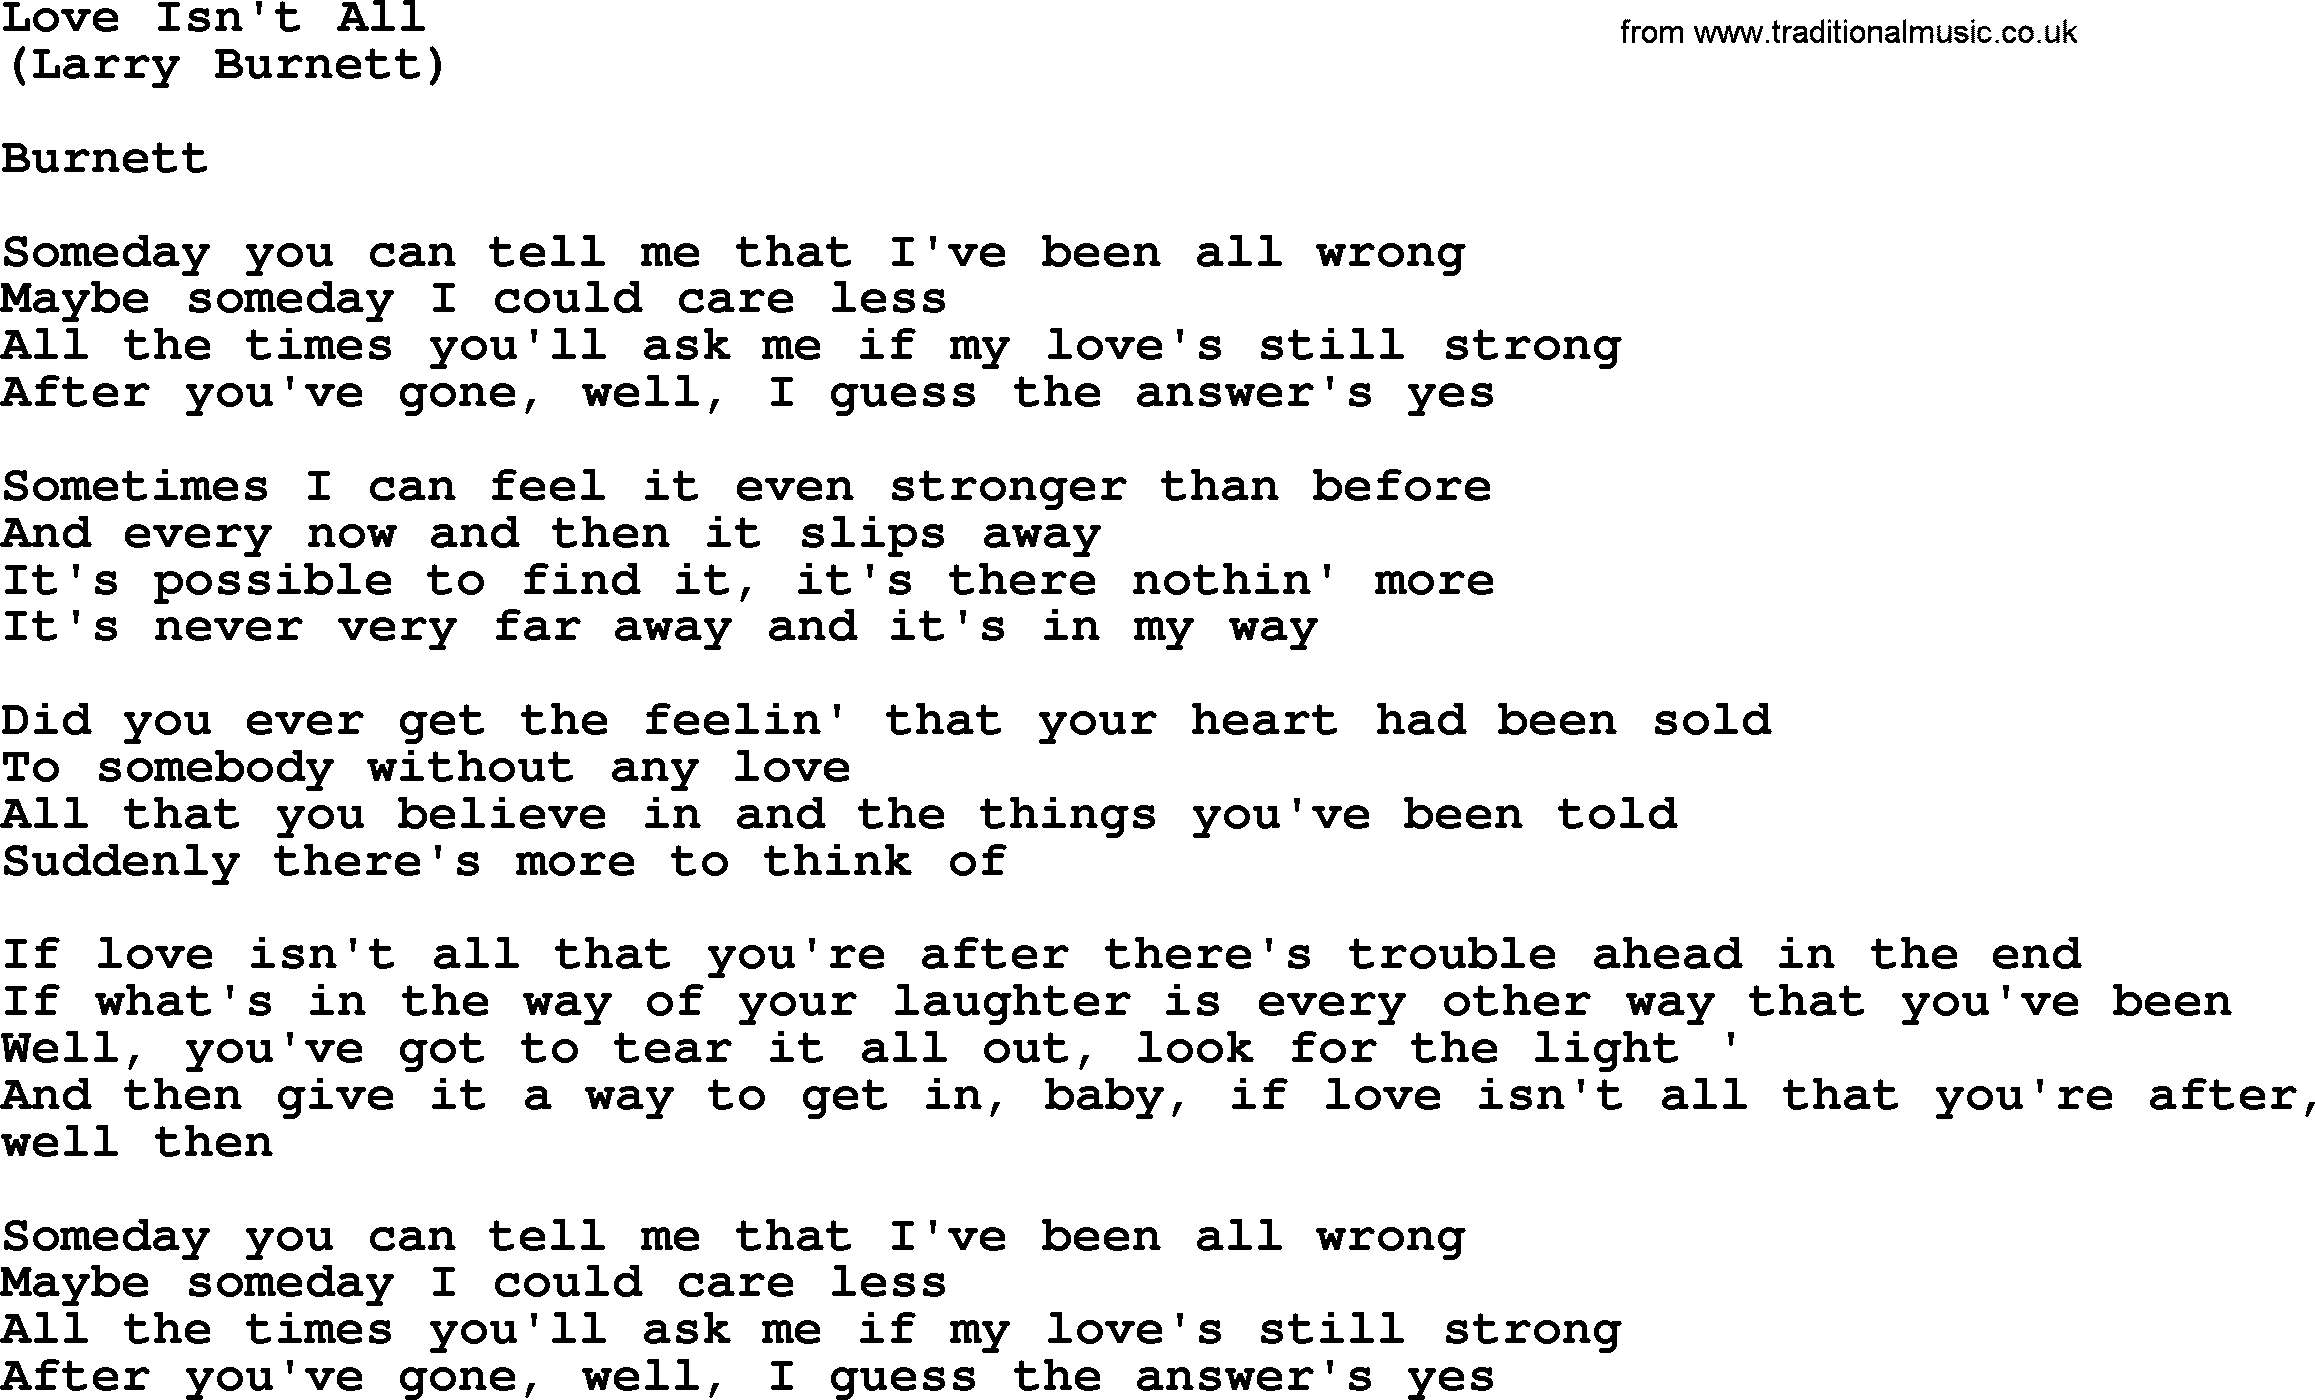 The Byrds song Love Isn't All, lyrics